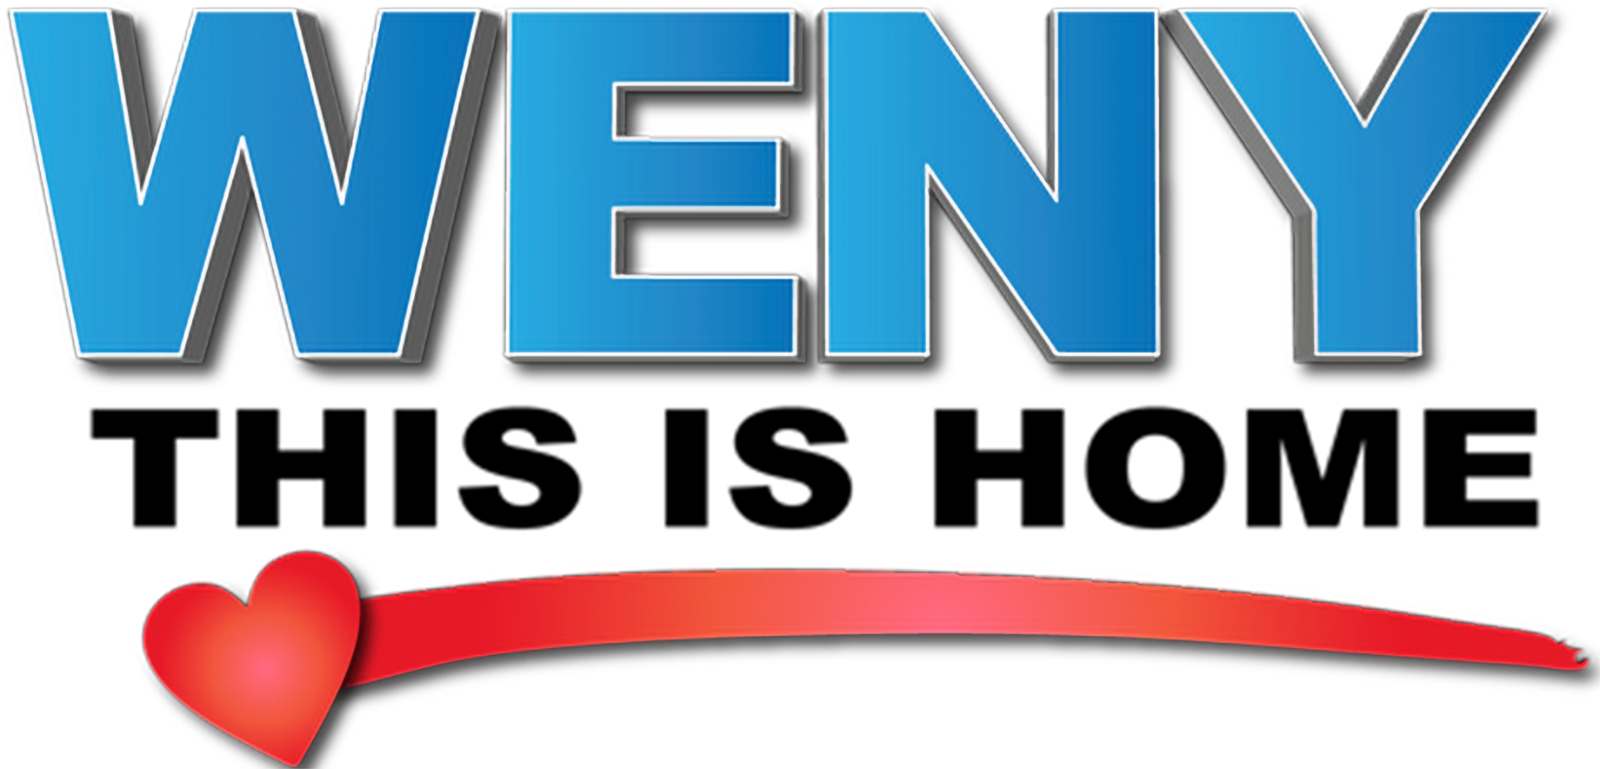 WENY News logo